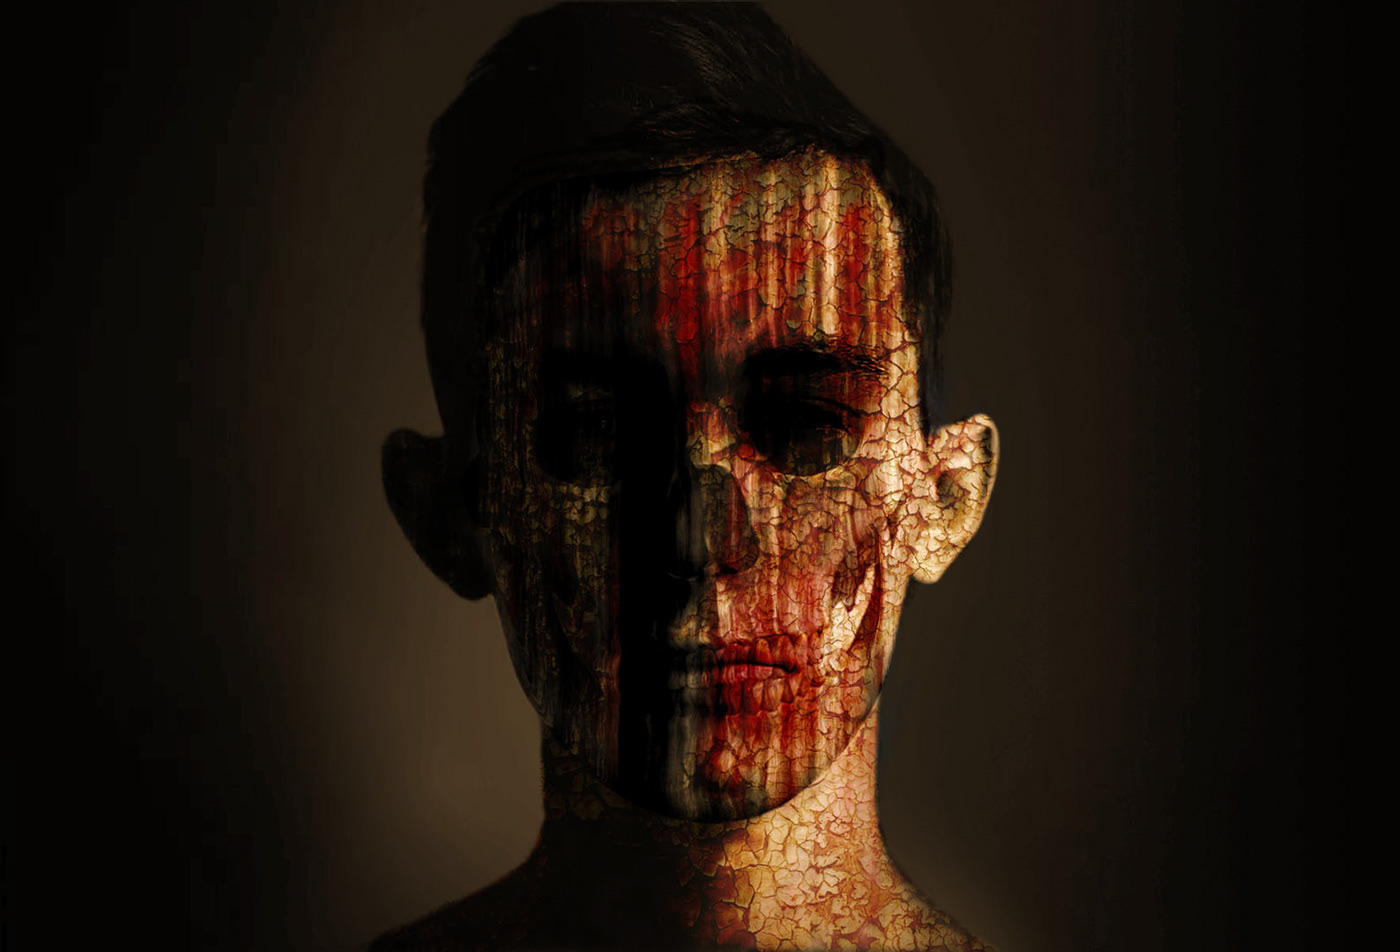 zombie photomanipulation photoshop student project Horror Art Blend modes curves adjustment layer masks